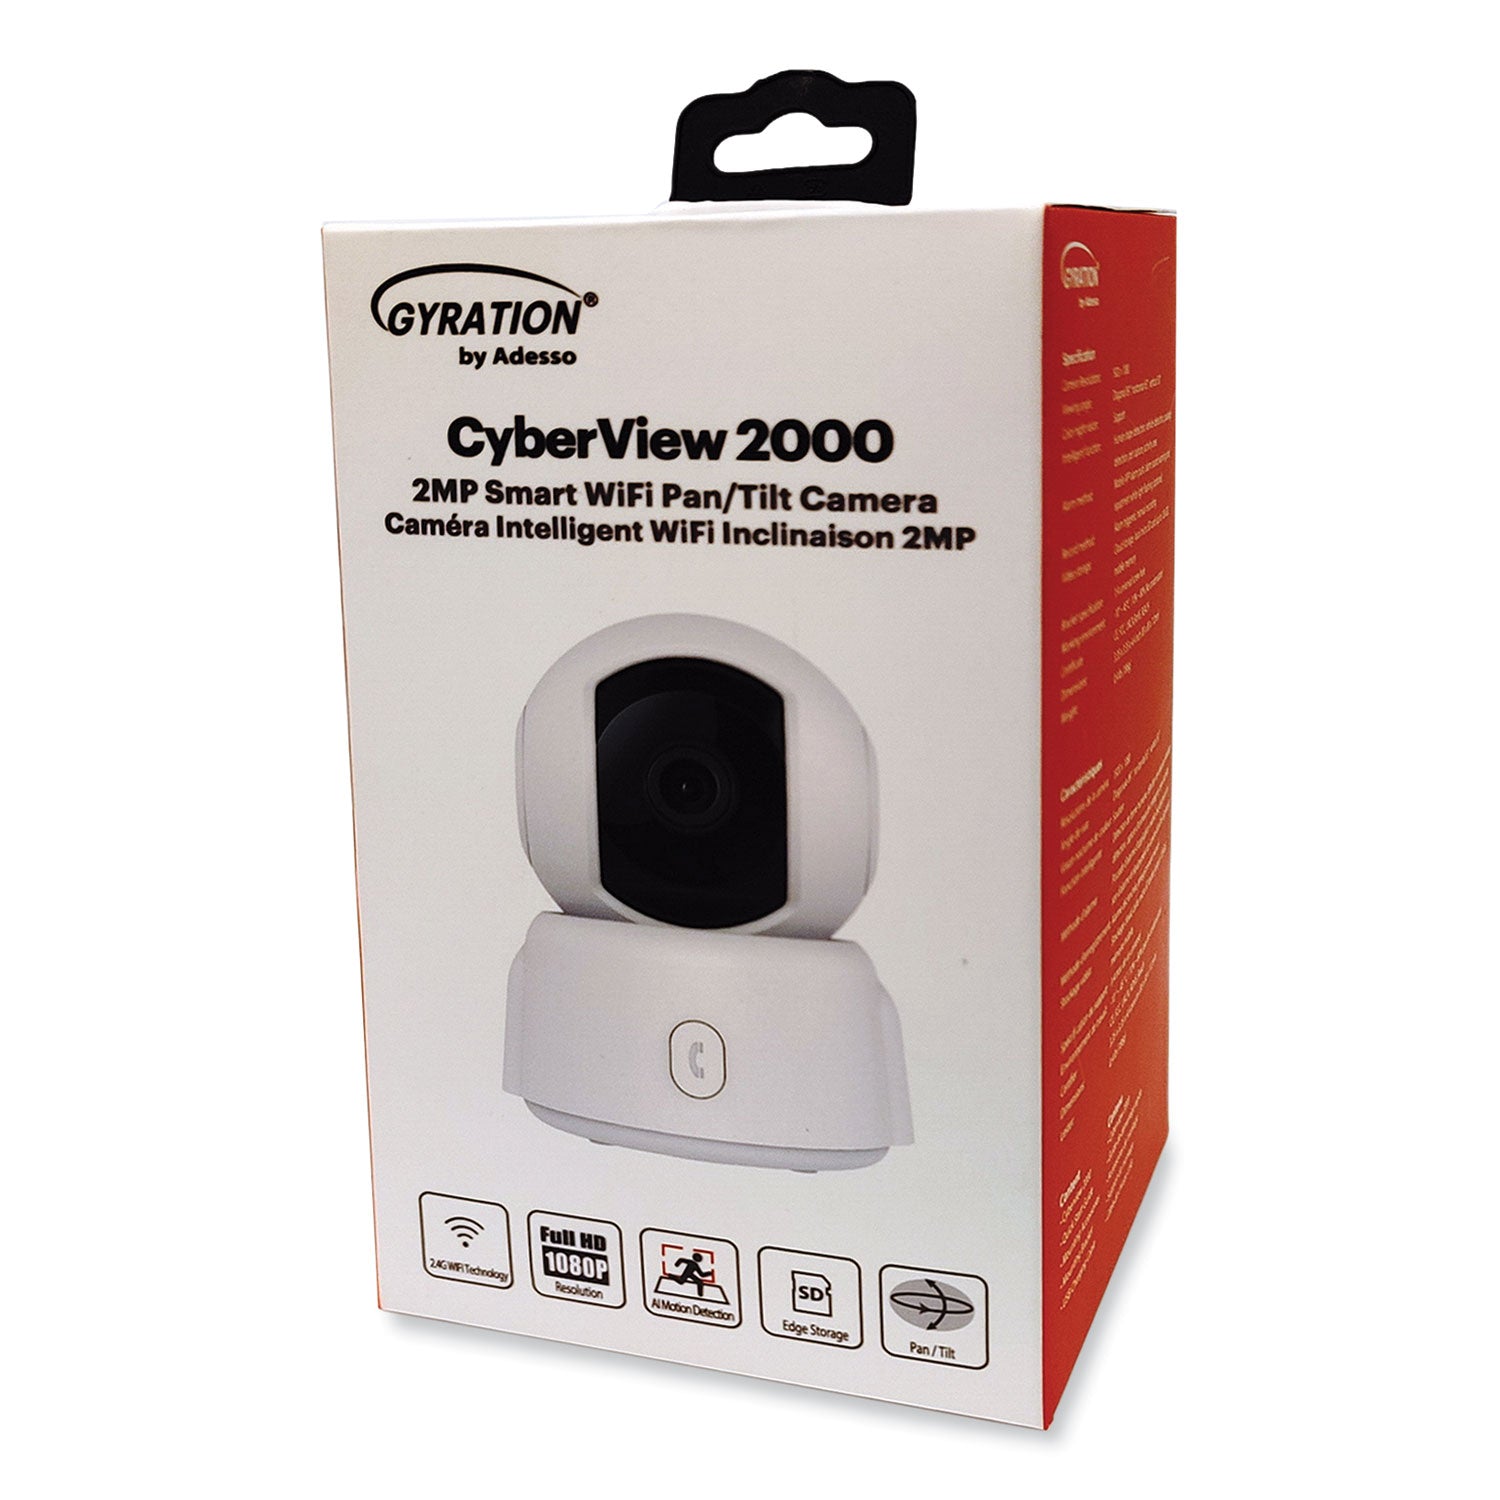 cyberview-2000-2mp-smart-wifi-pan-tilt-camera-1920-x-1080-pixels_adecybrview2000 - 4